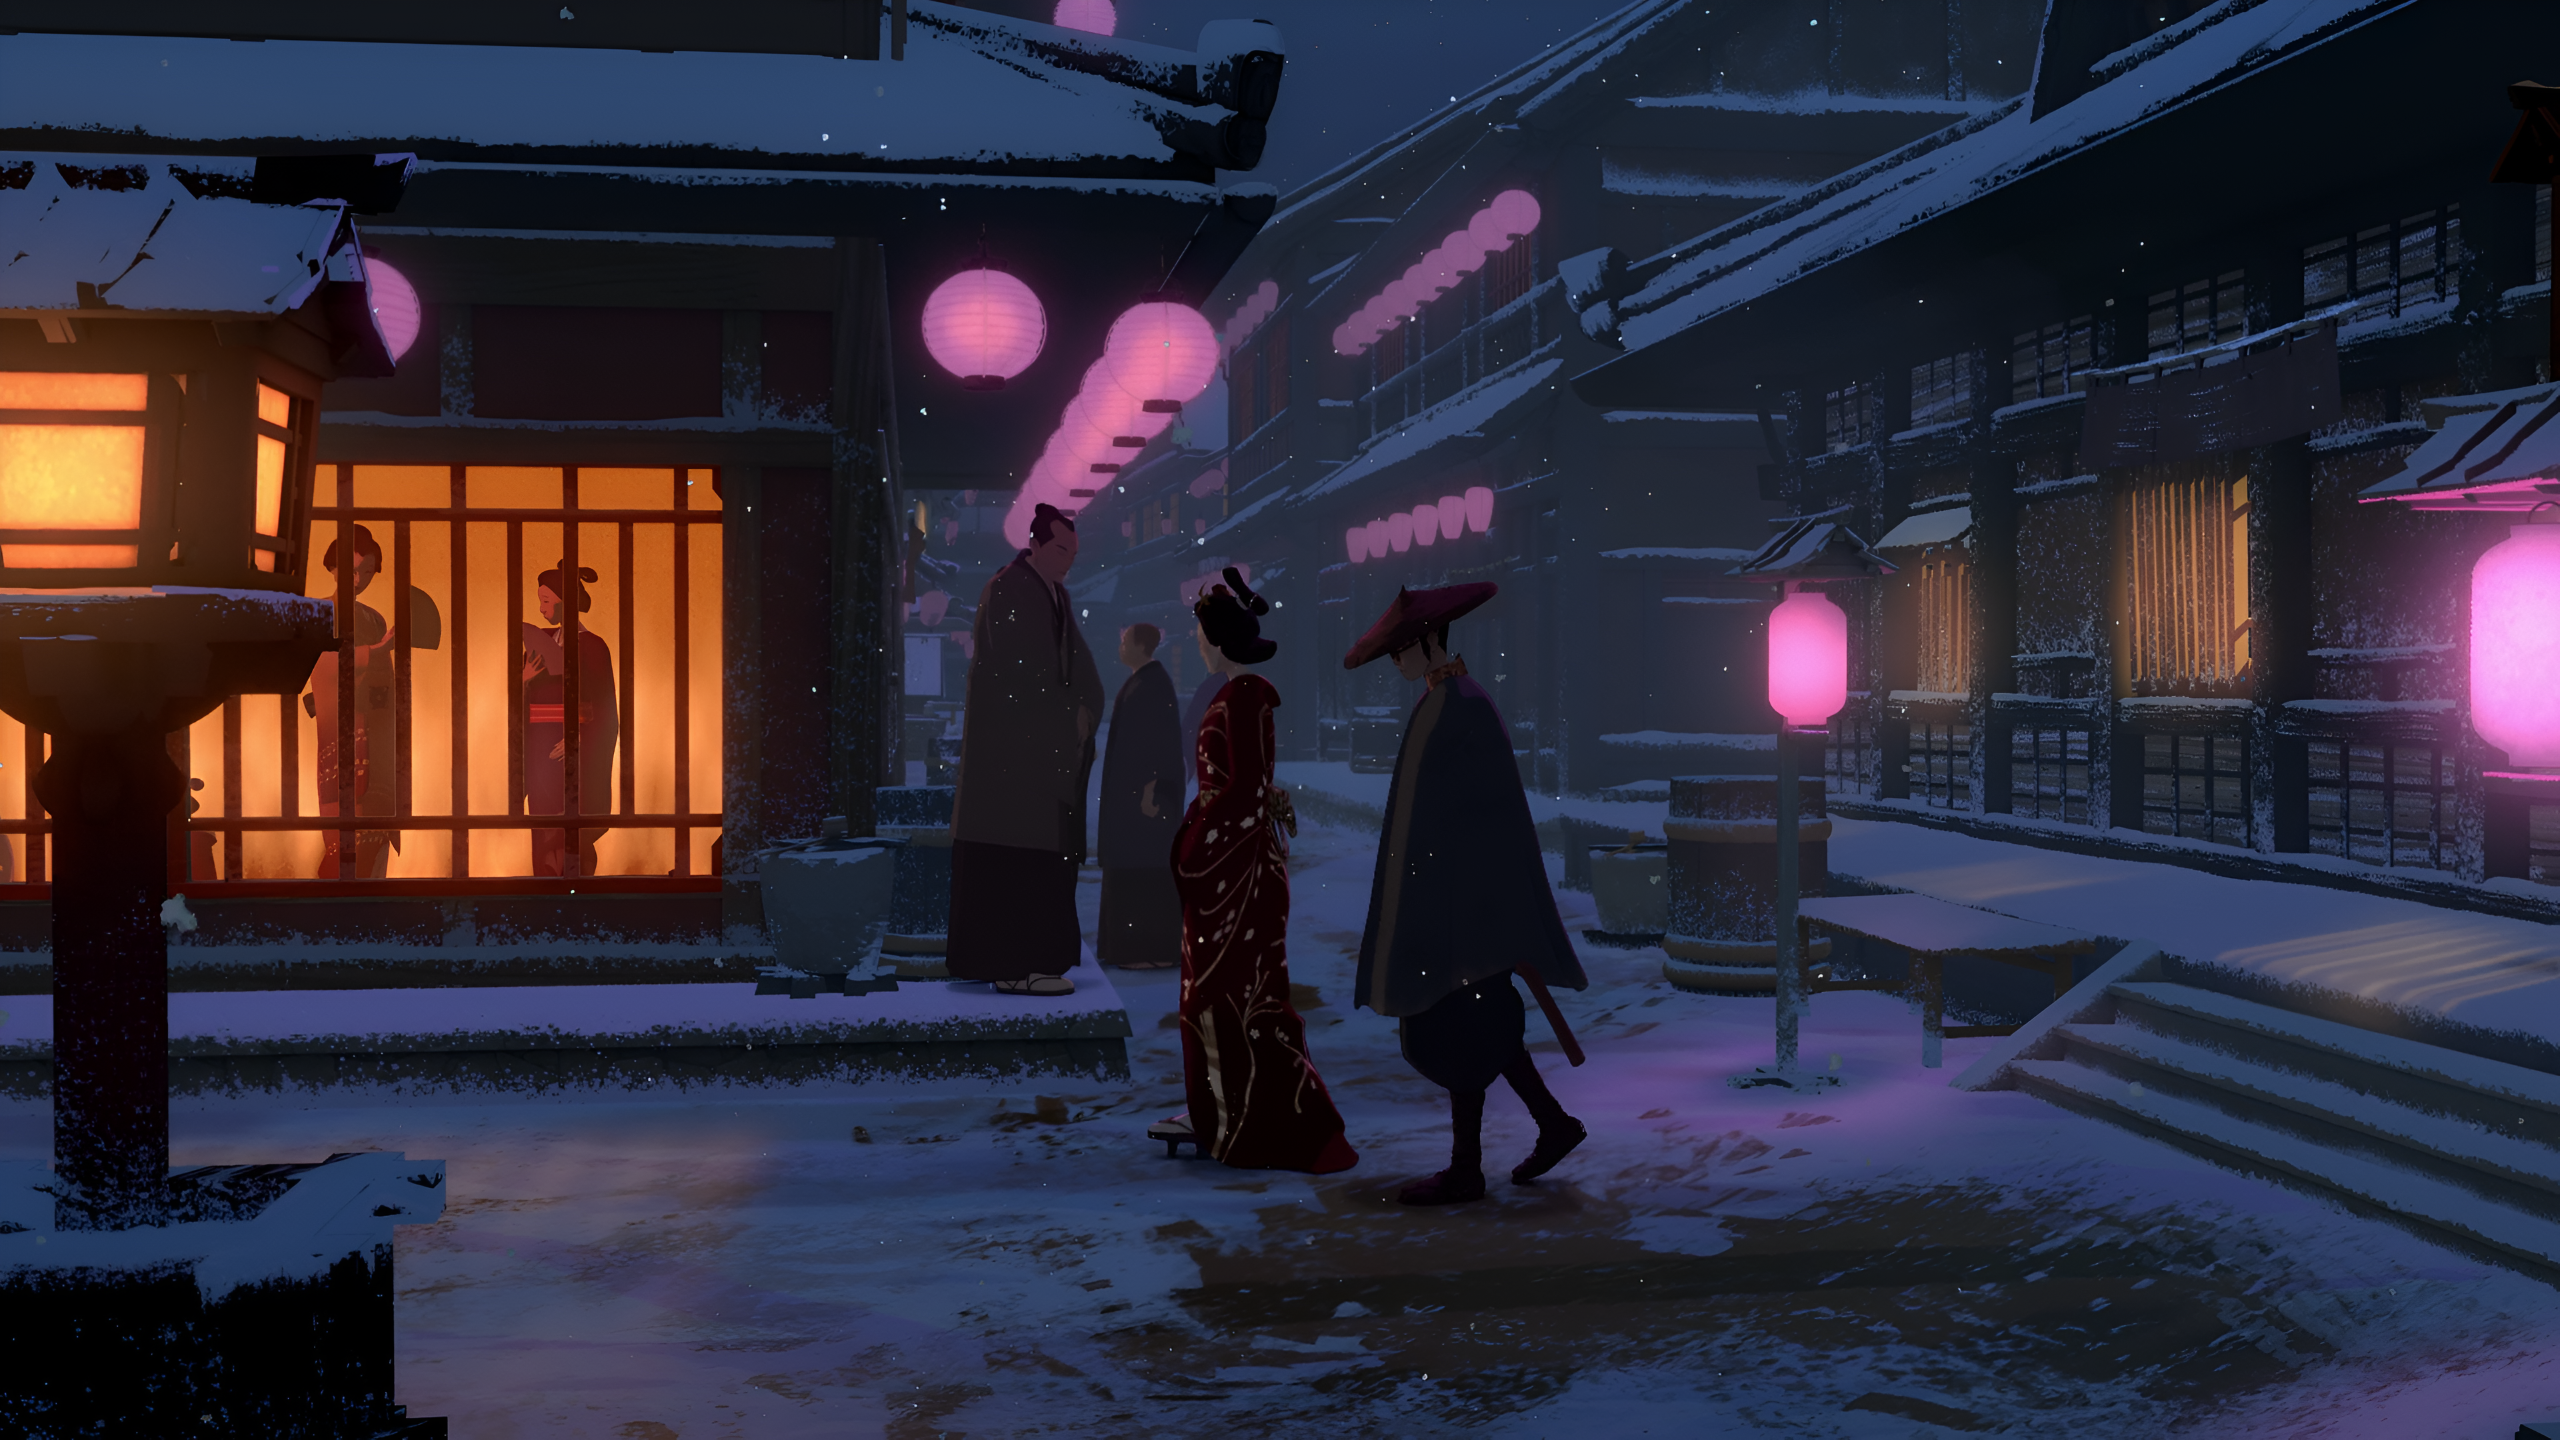 General 2560x1440 Blue Eye Samurai samurai town snow walking digital art building people geisha hand fan lantern kimono night snowing